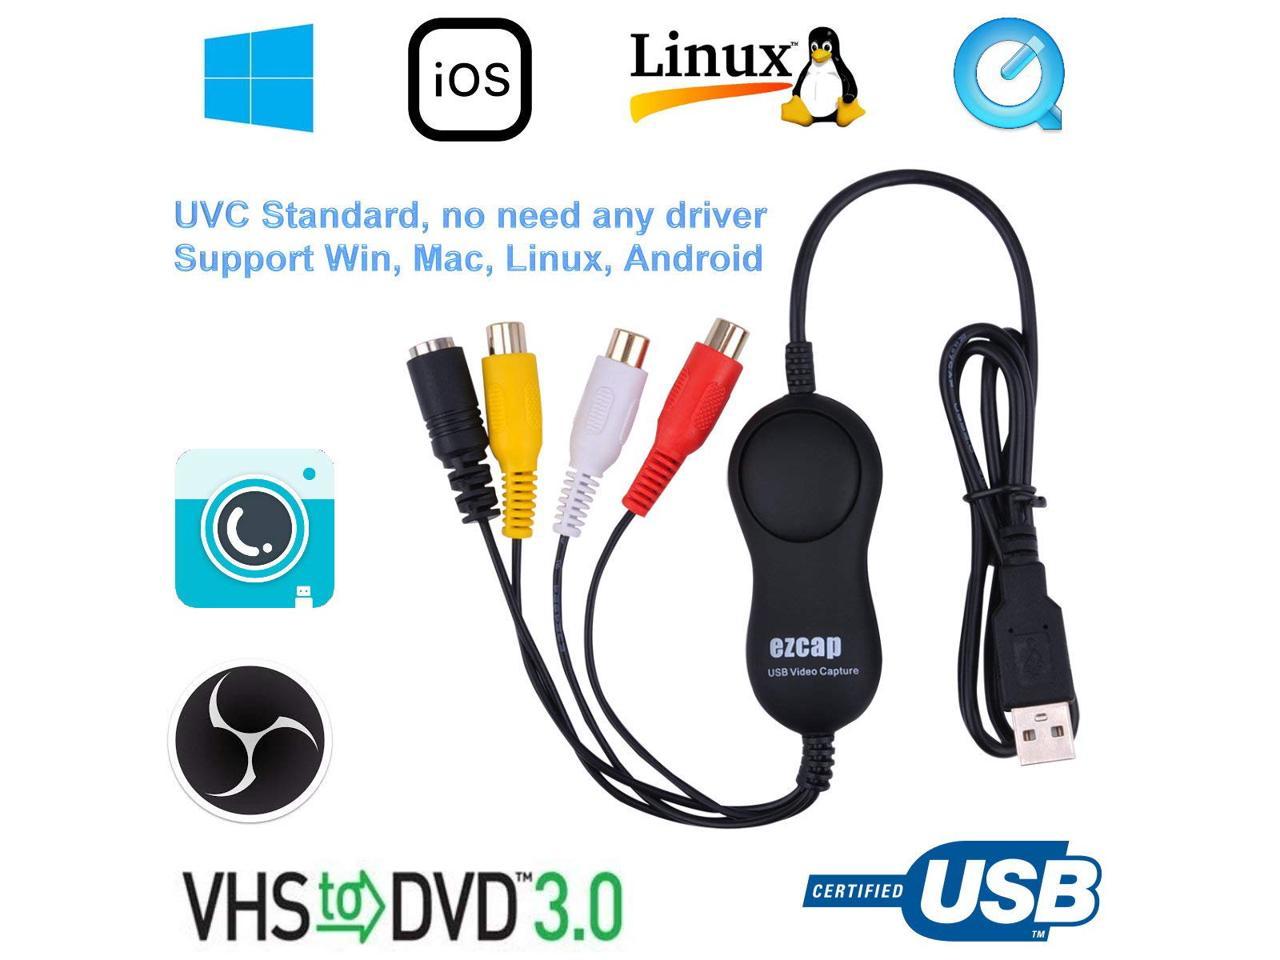 Ezcap158 Usb Audio Video Recording Card Uvc Video Capture Convert Analog Video Audio To Digital Format For Xbox Vhs Ps3 Newegg Com